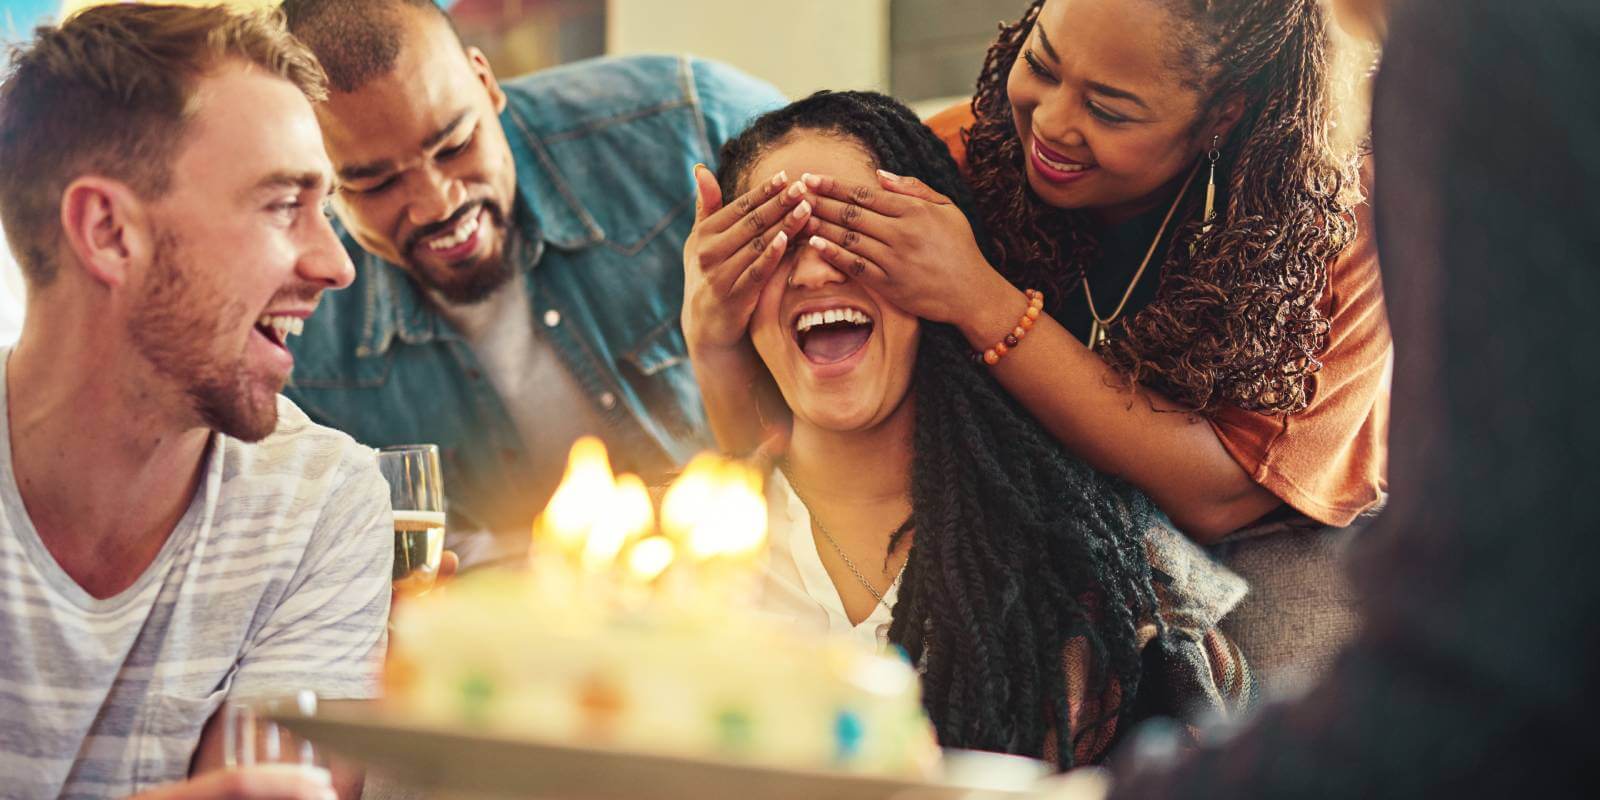 creative gift ideas for milestone birthdays